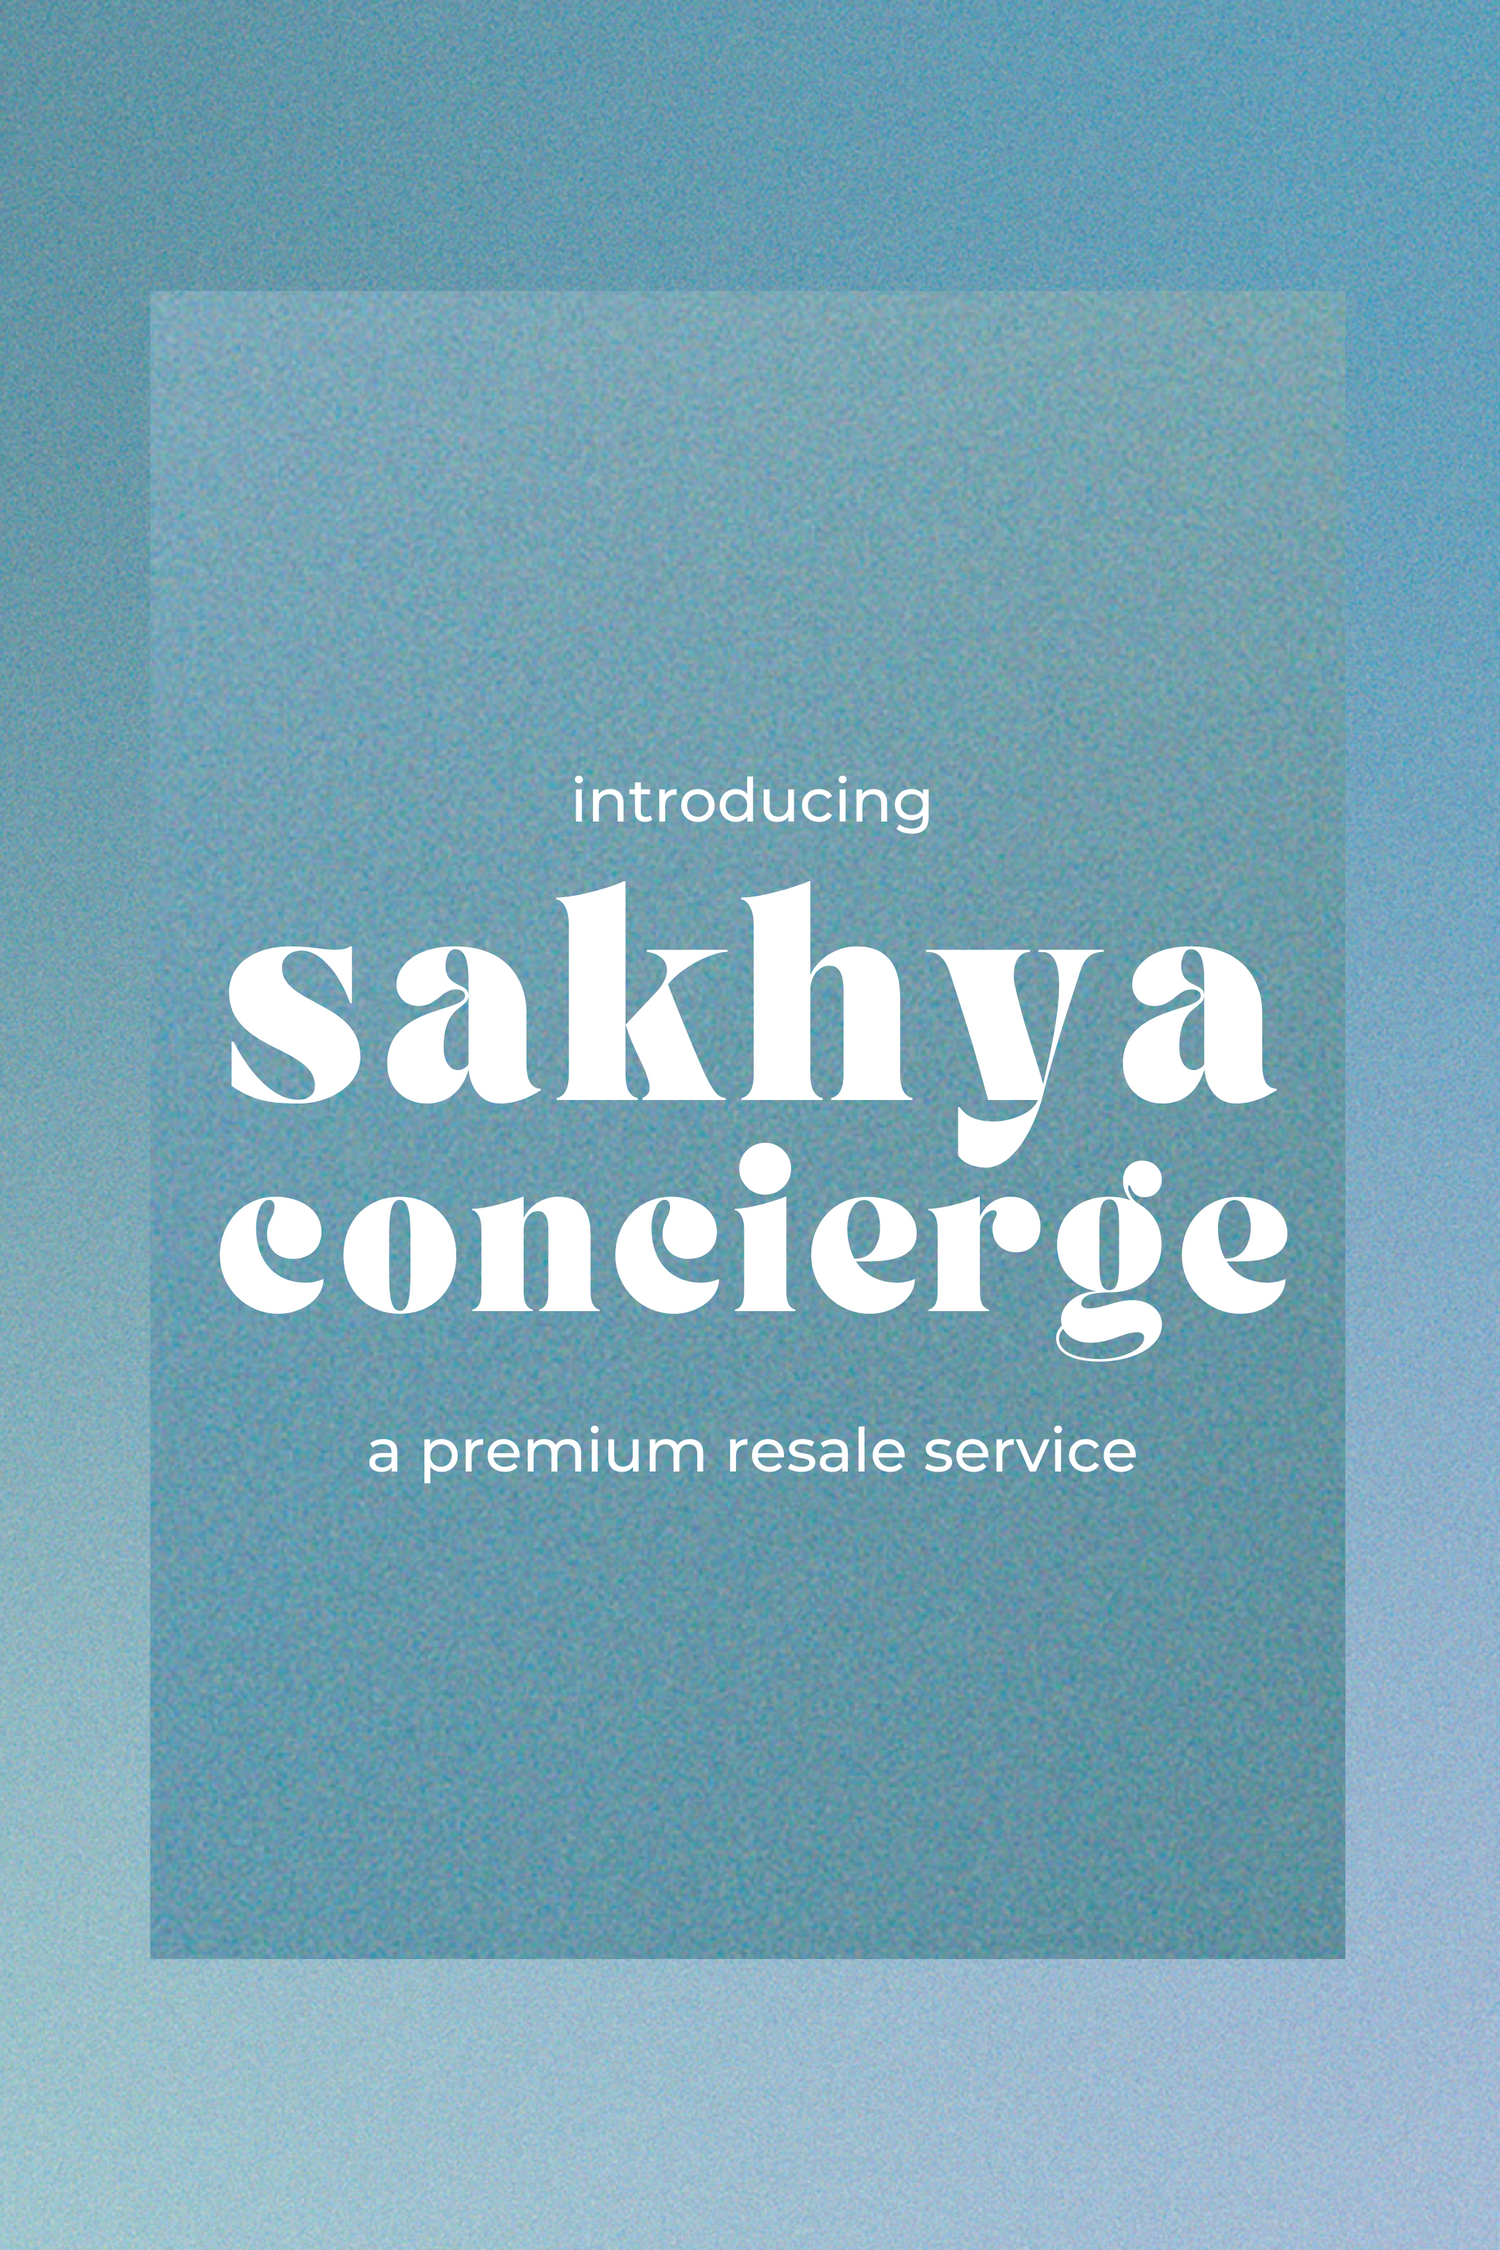 sakhya banner sakhya concierge a premium resale service